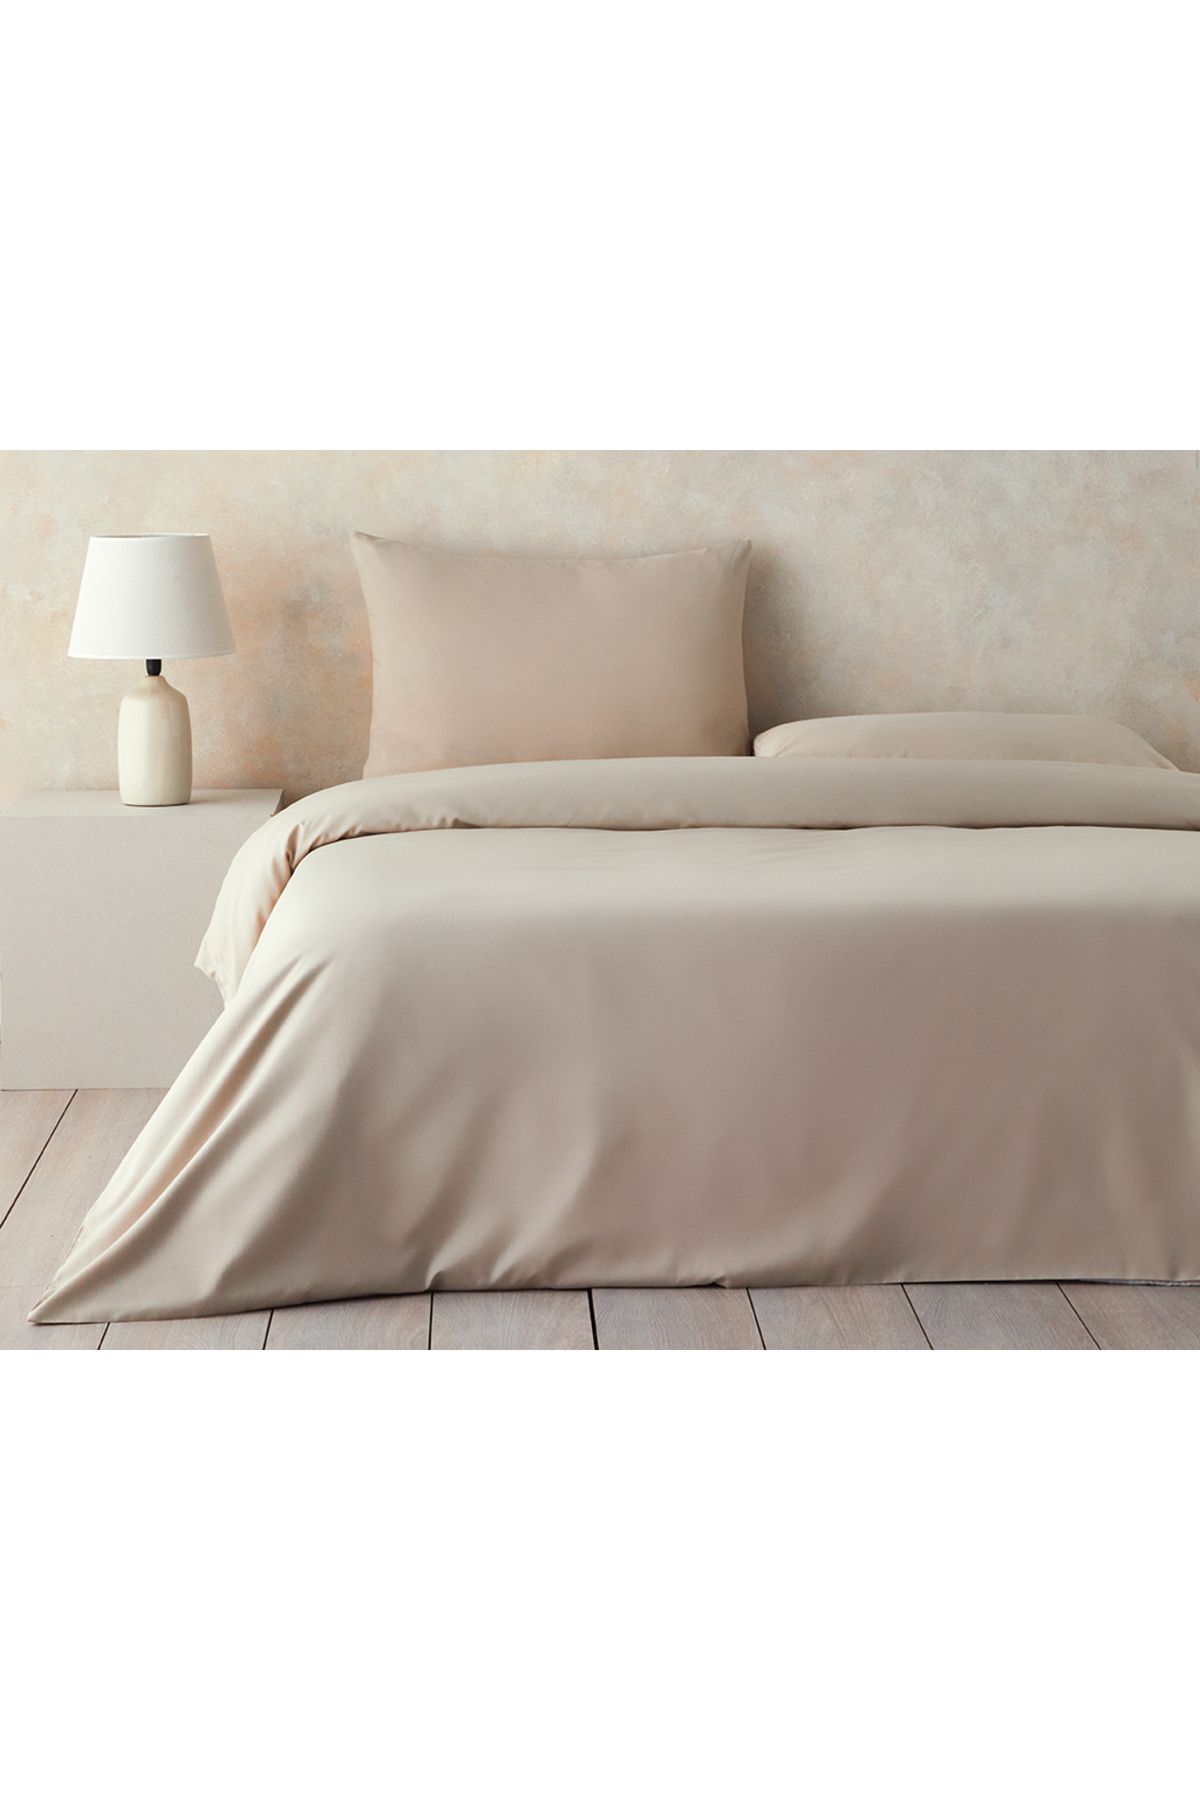 English Home Nova Premium Soft Cotton Çift Kişilik Nevresim Takımı 200x220 cm Bej